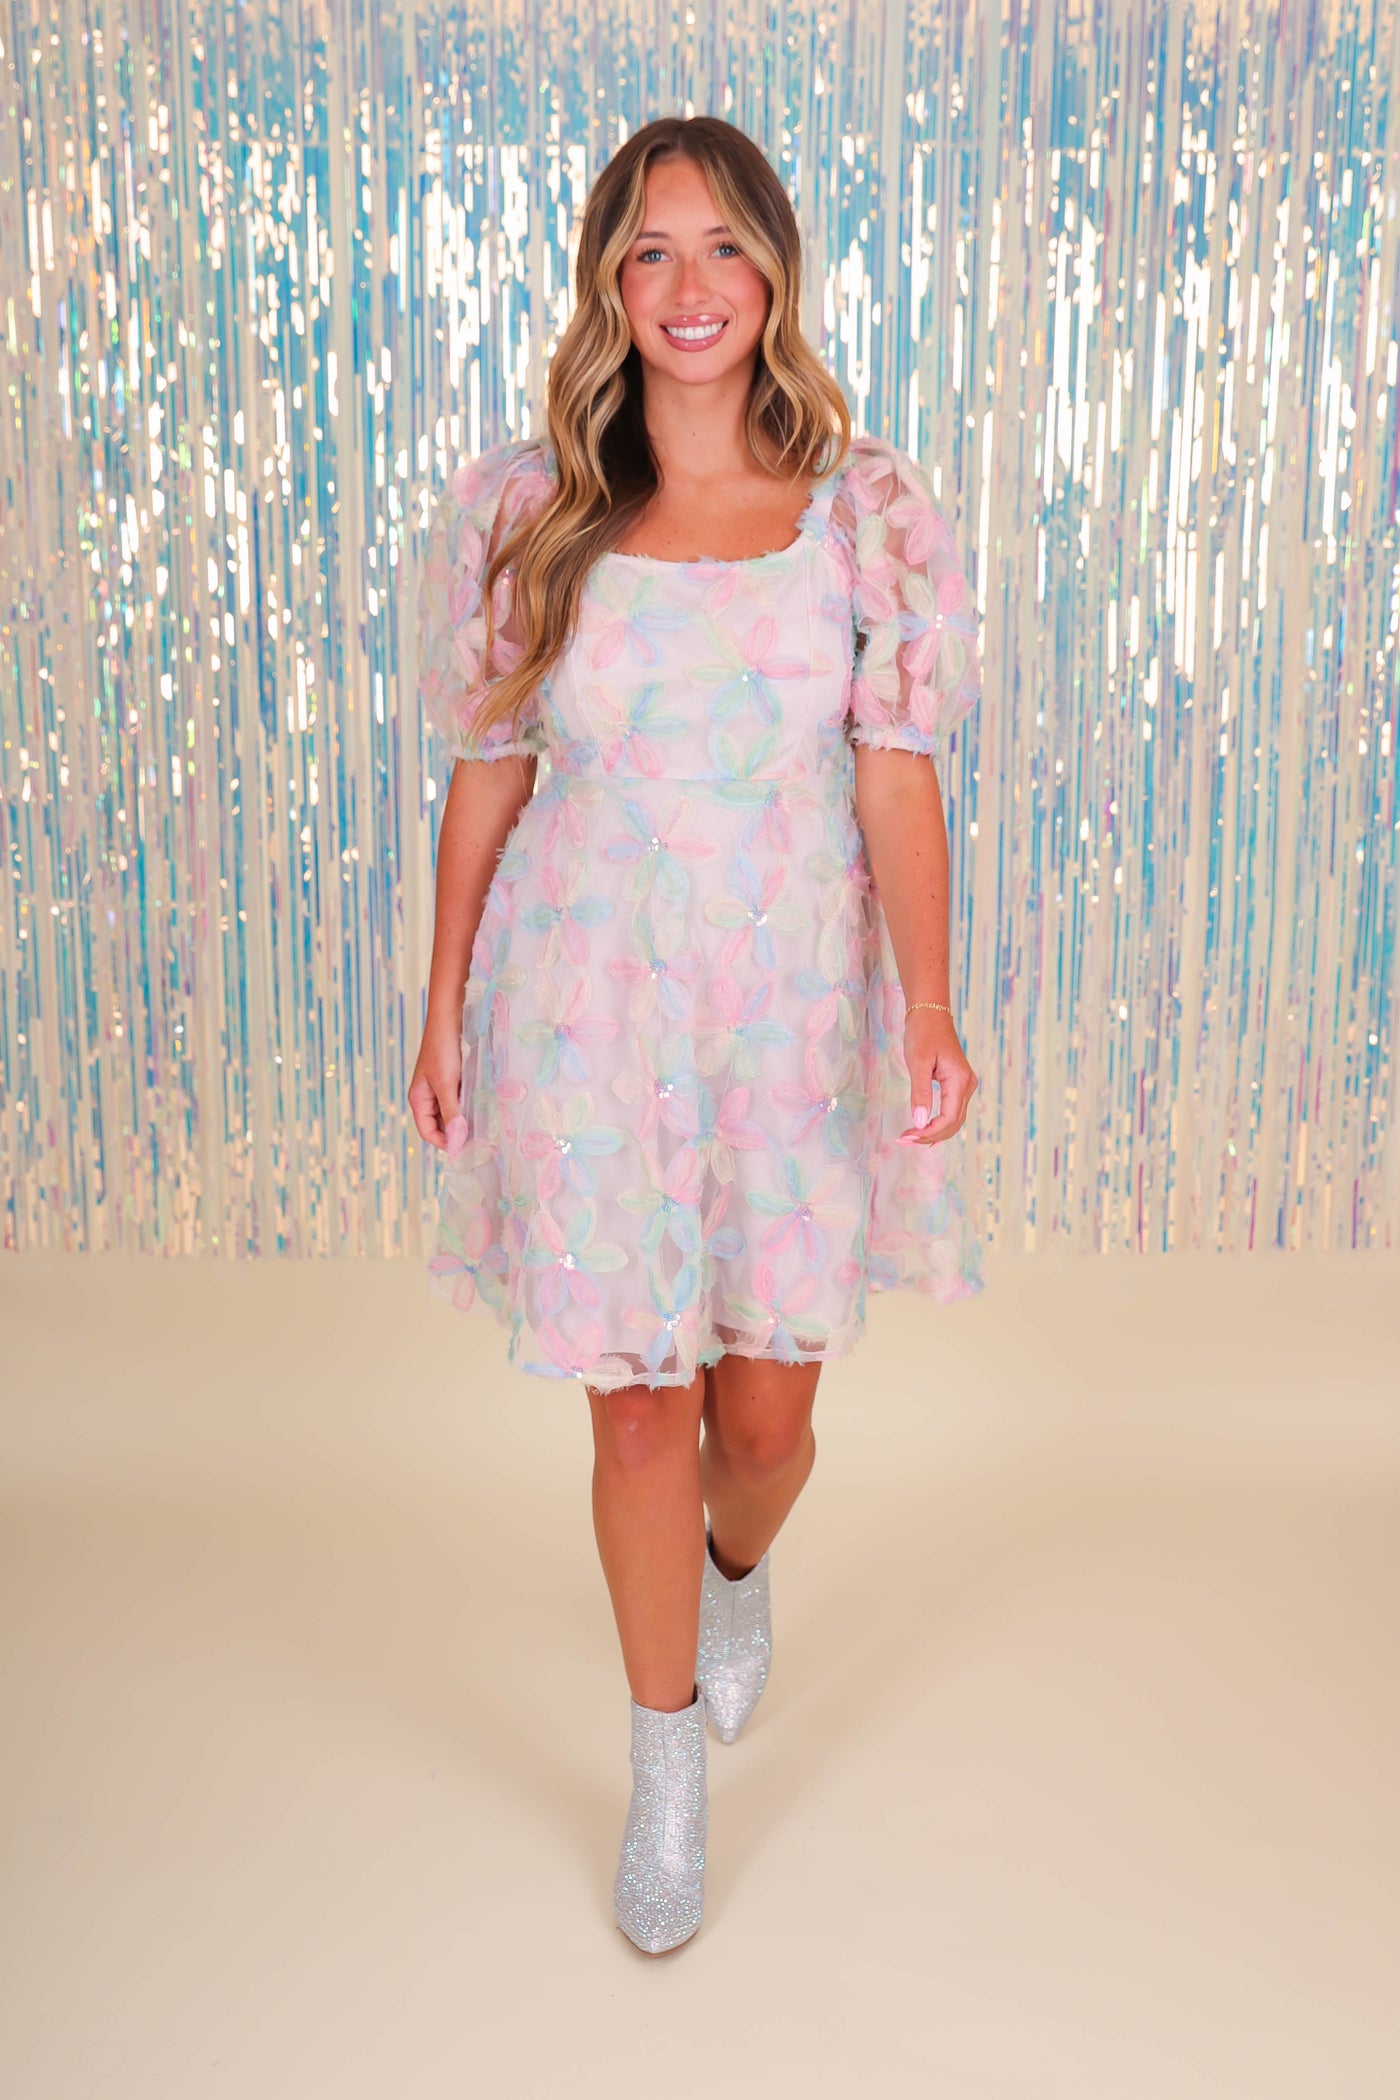 Floral Chiffon Dress- Women's Pastel Babydoll Dress- Jodifl Flower Dress